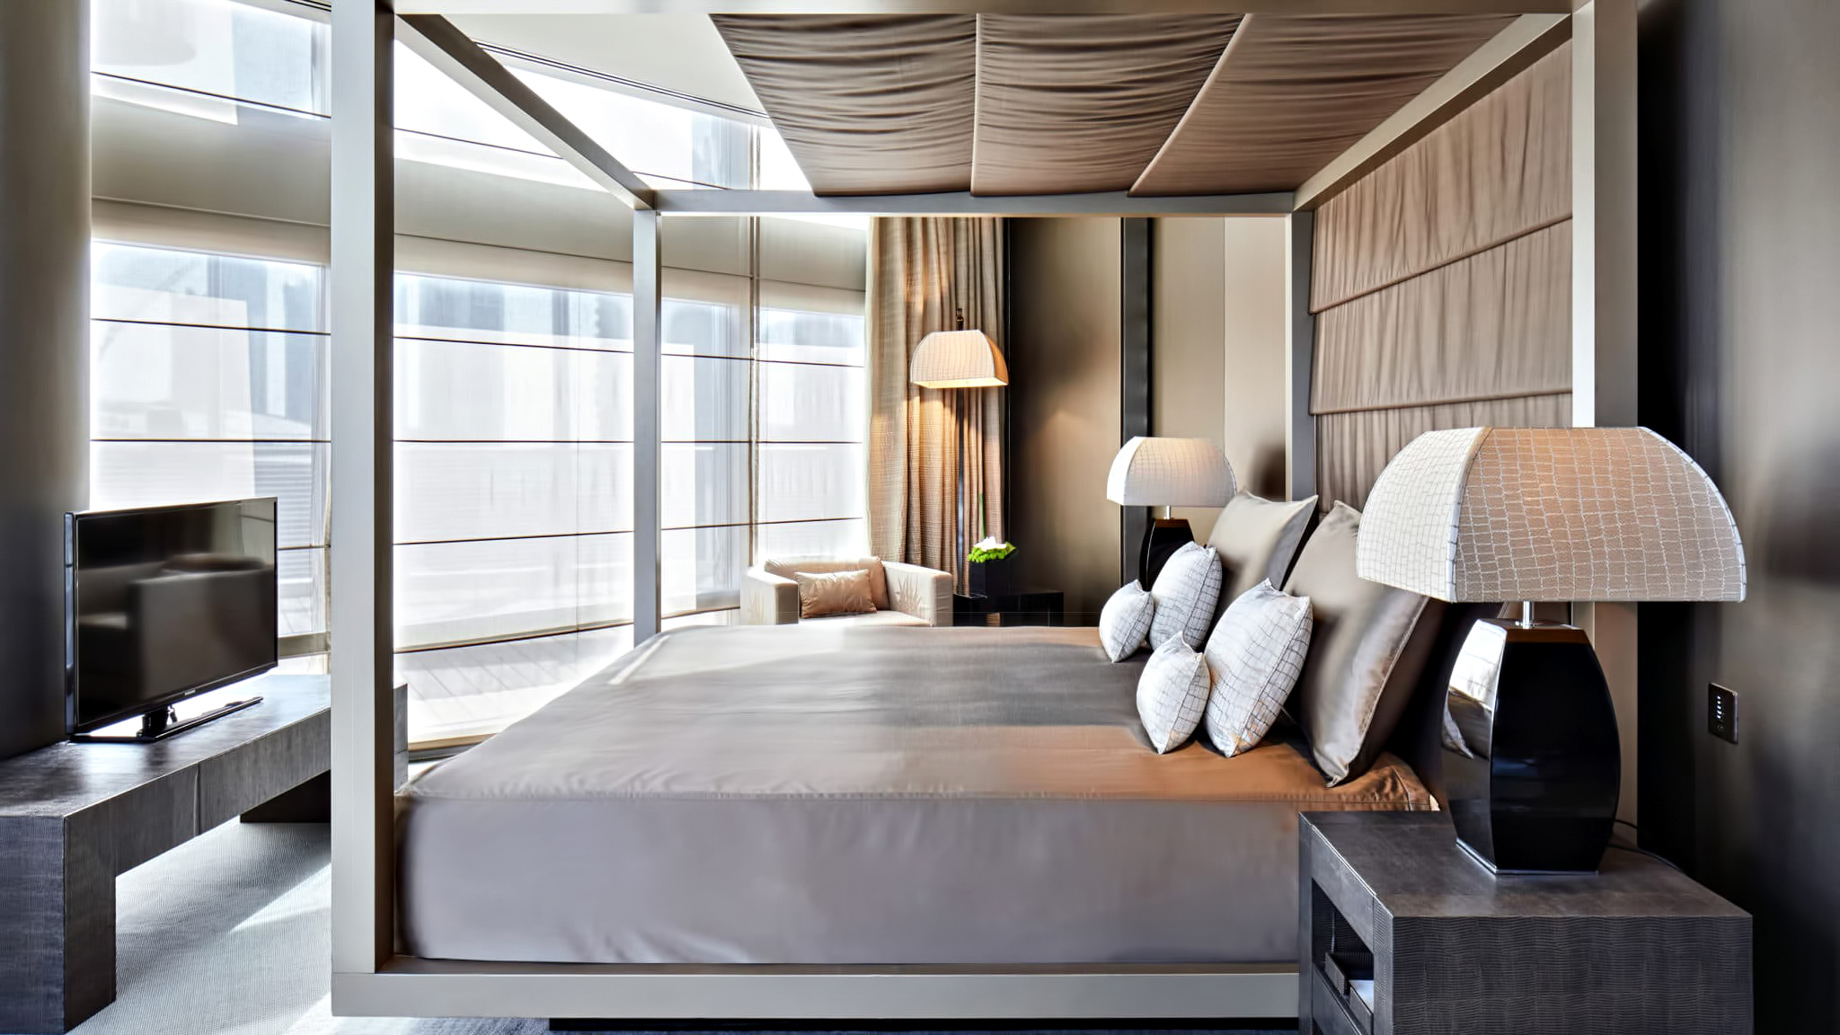 Armani Hotel Dubai - Burj Khalifa, Dubai, UAE - Armani Ambassador Suite Bedroom